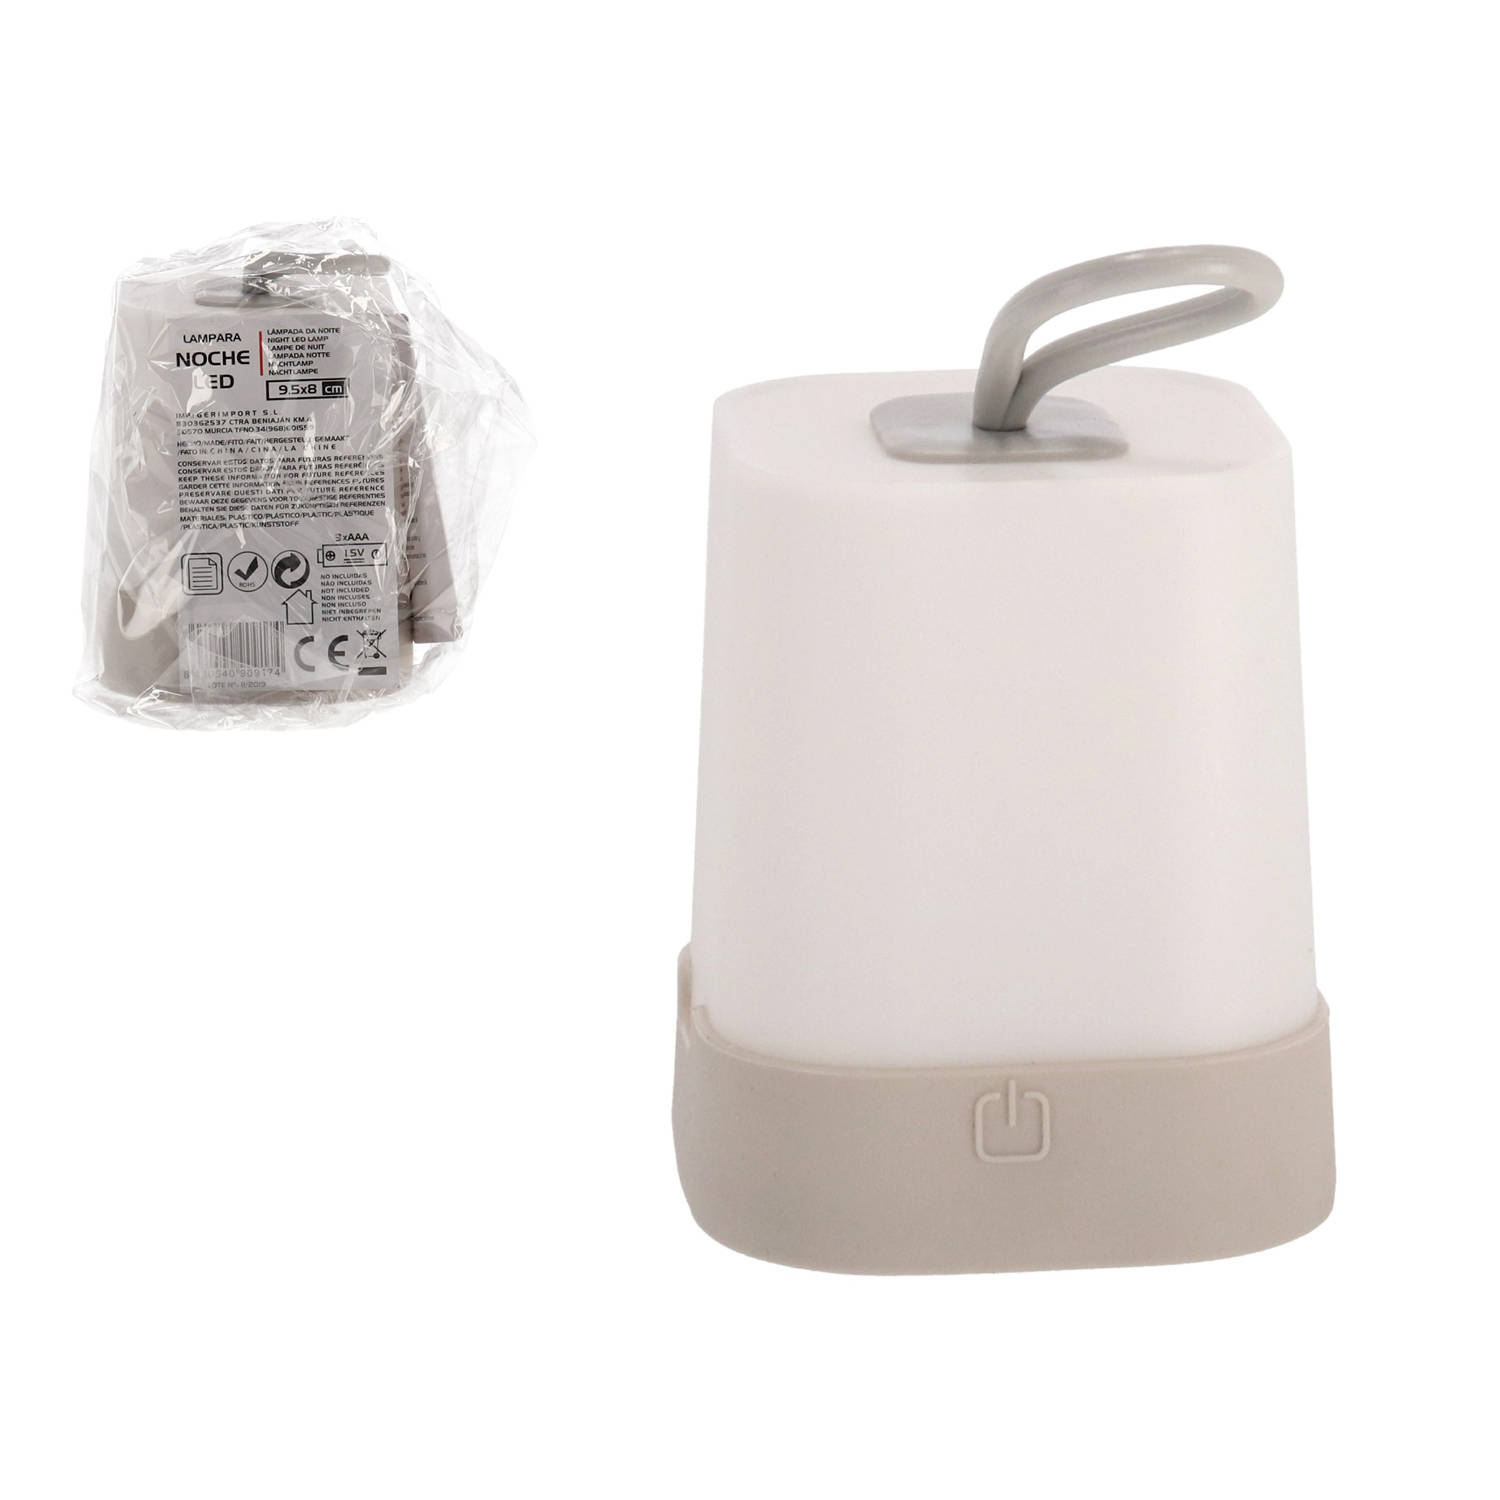 Gerimport - Handige Tafellamp/nachtlamp - Camping Lamp - Led - 9,5x8cm - Wit/bruin